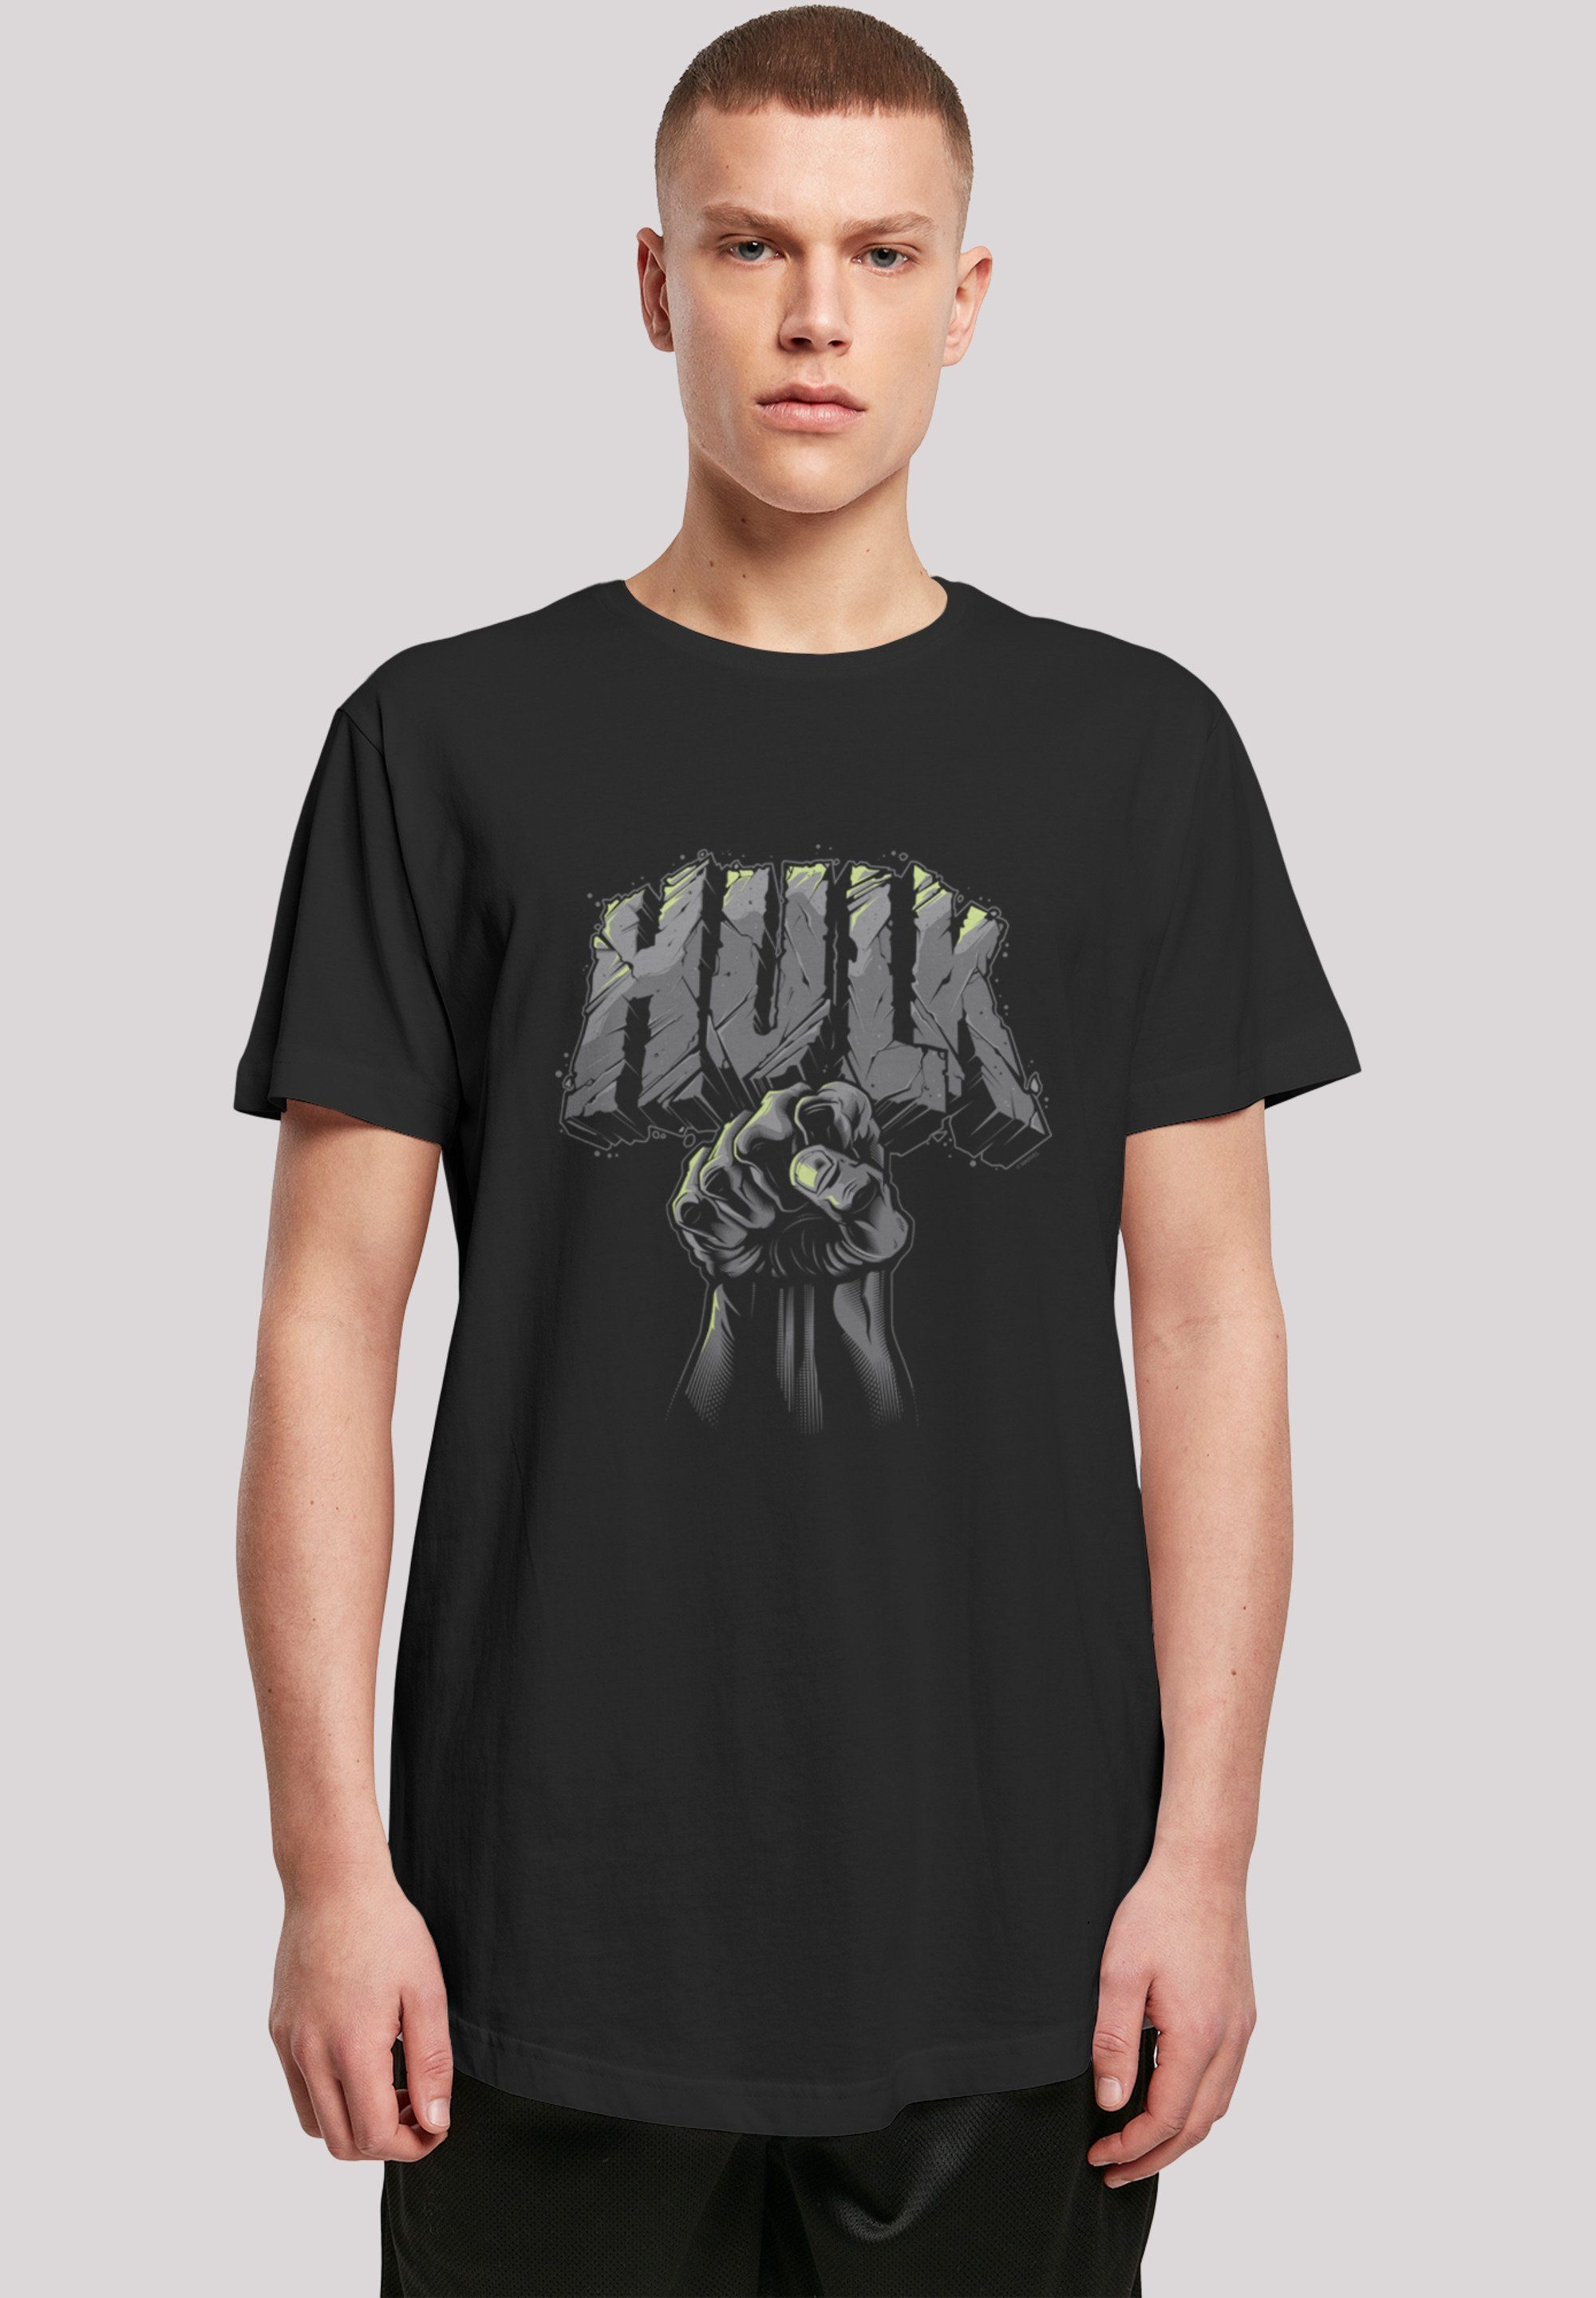 Punch T-Shirt Marvel F4NT4STIC Hulk Print Superhelden Logo'